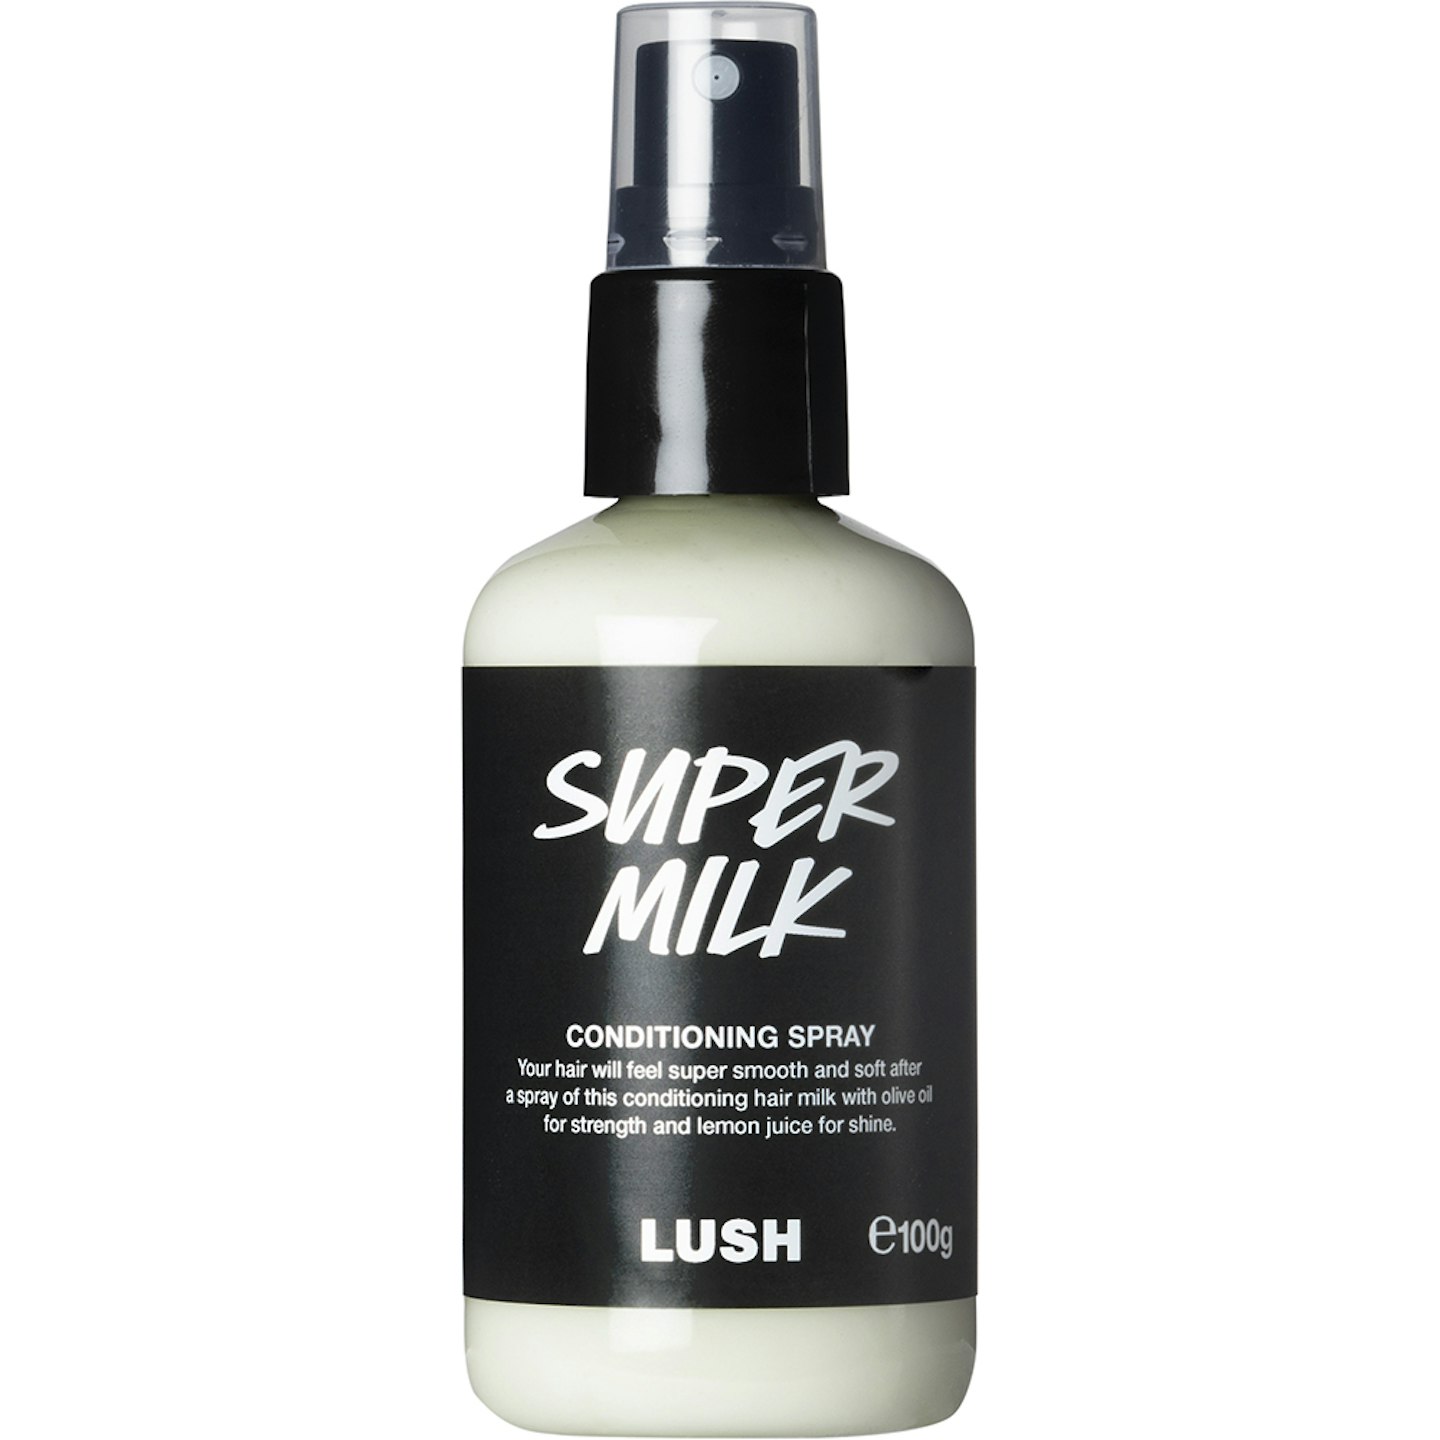 Lush Super Milk Conditioning Spray